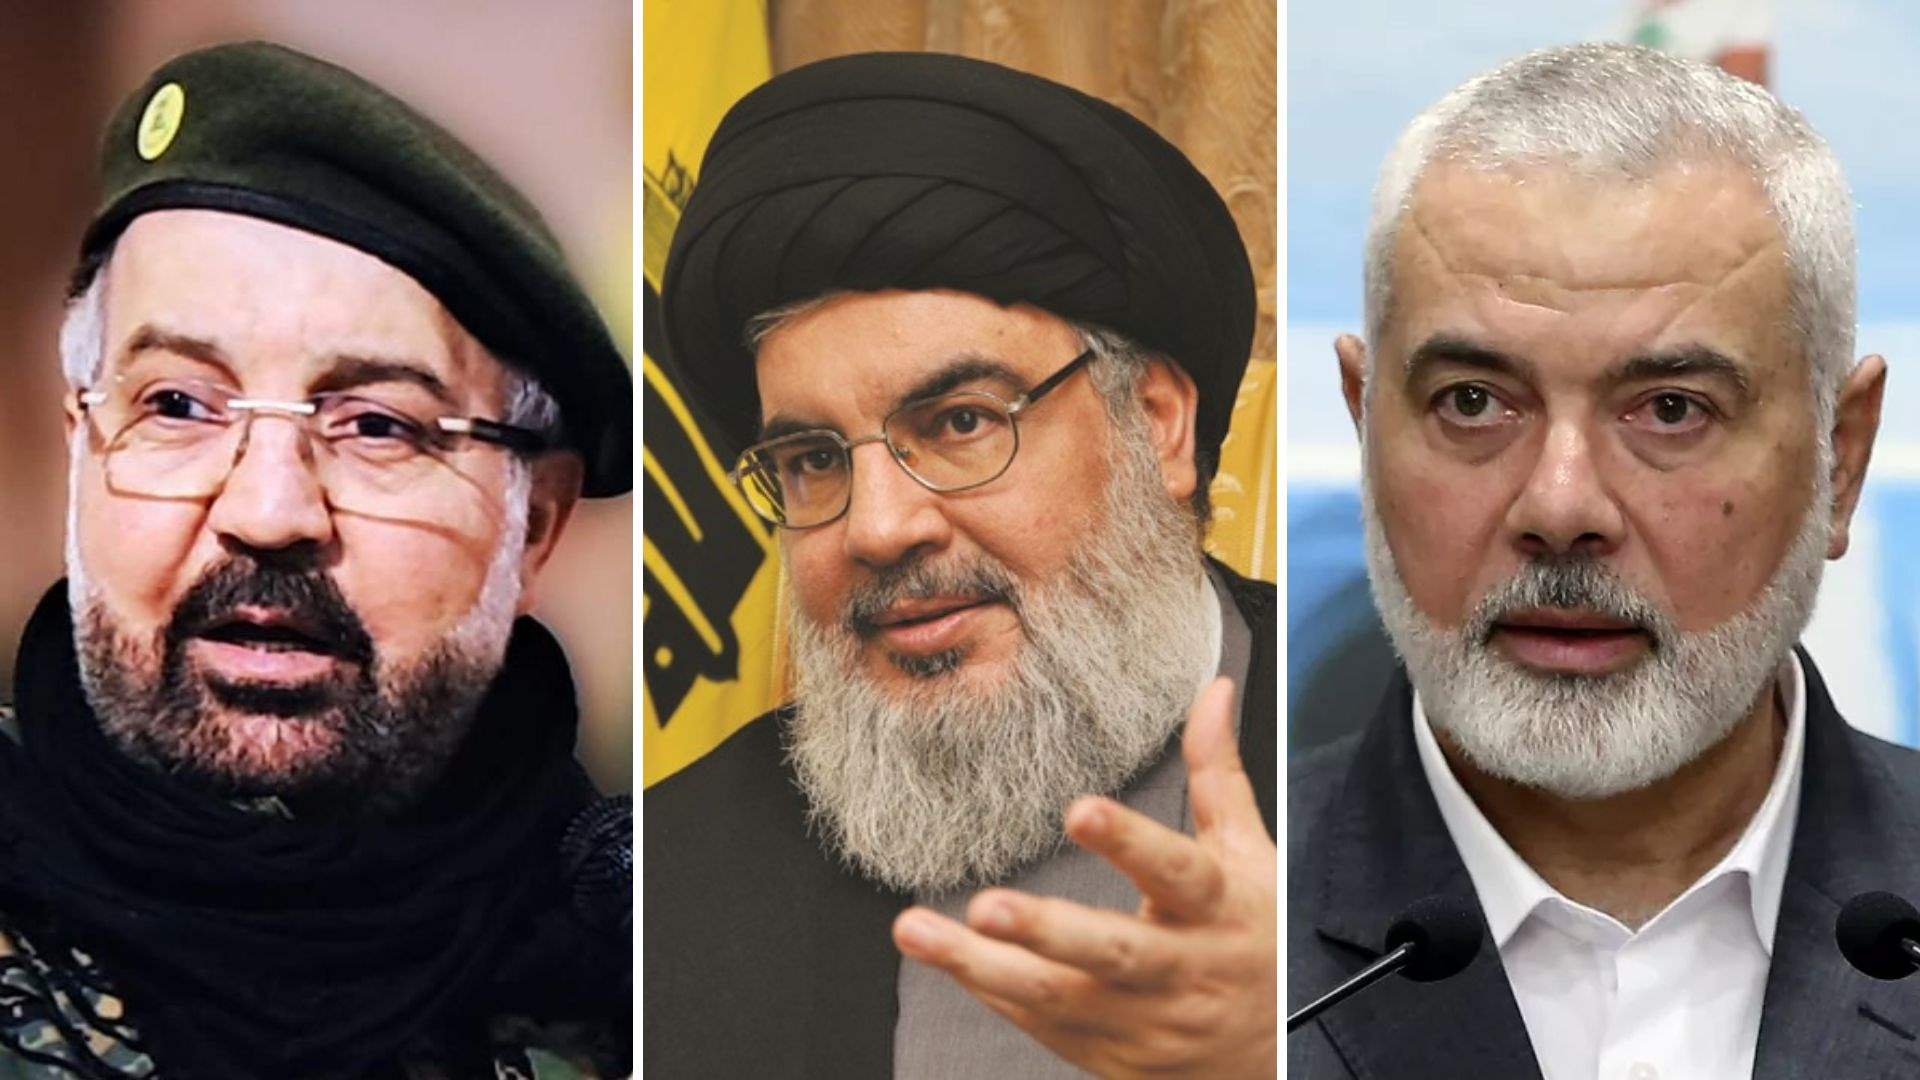 Hezbollah&#39;s Nasrallah vows retaliation against Israel in major speech following Shokor and Haniyeh assassinations: Key takeaways